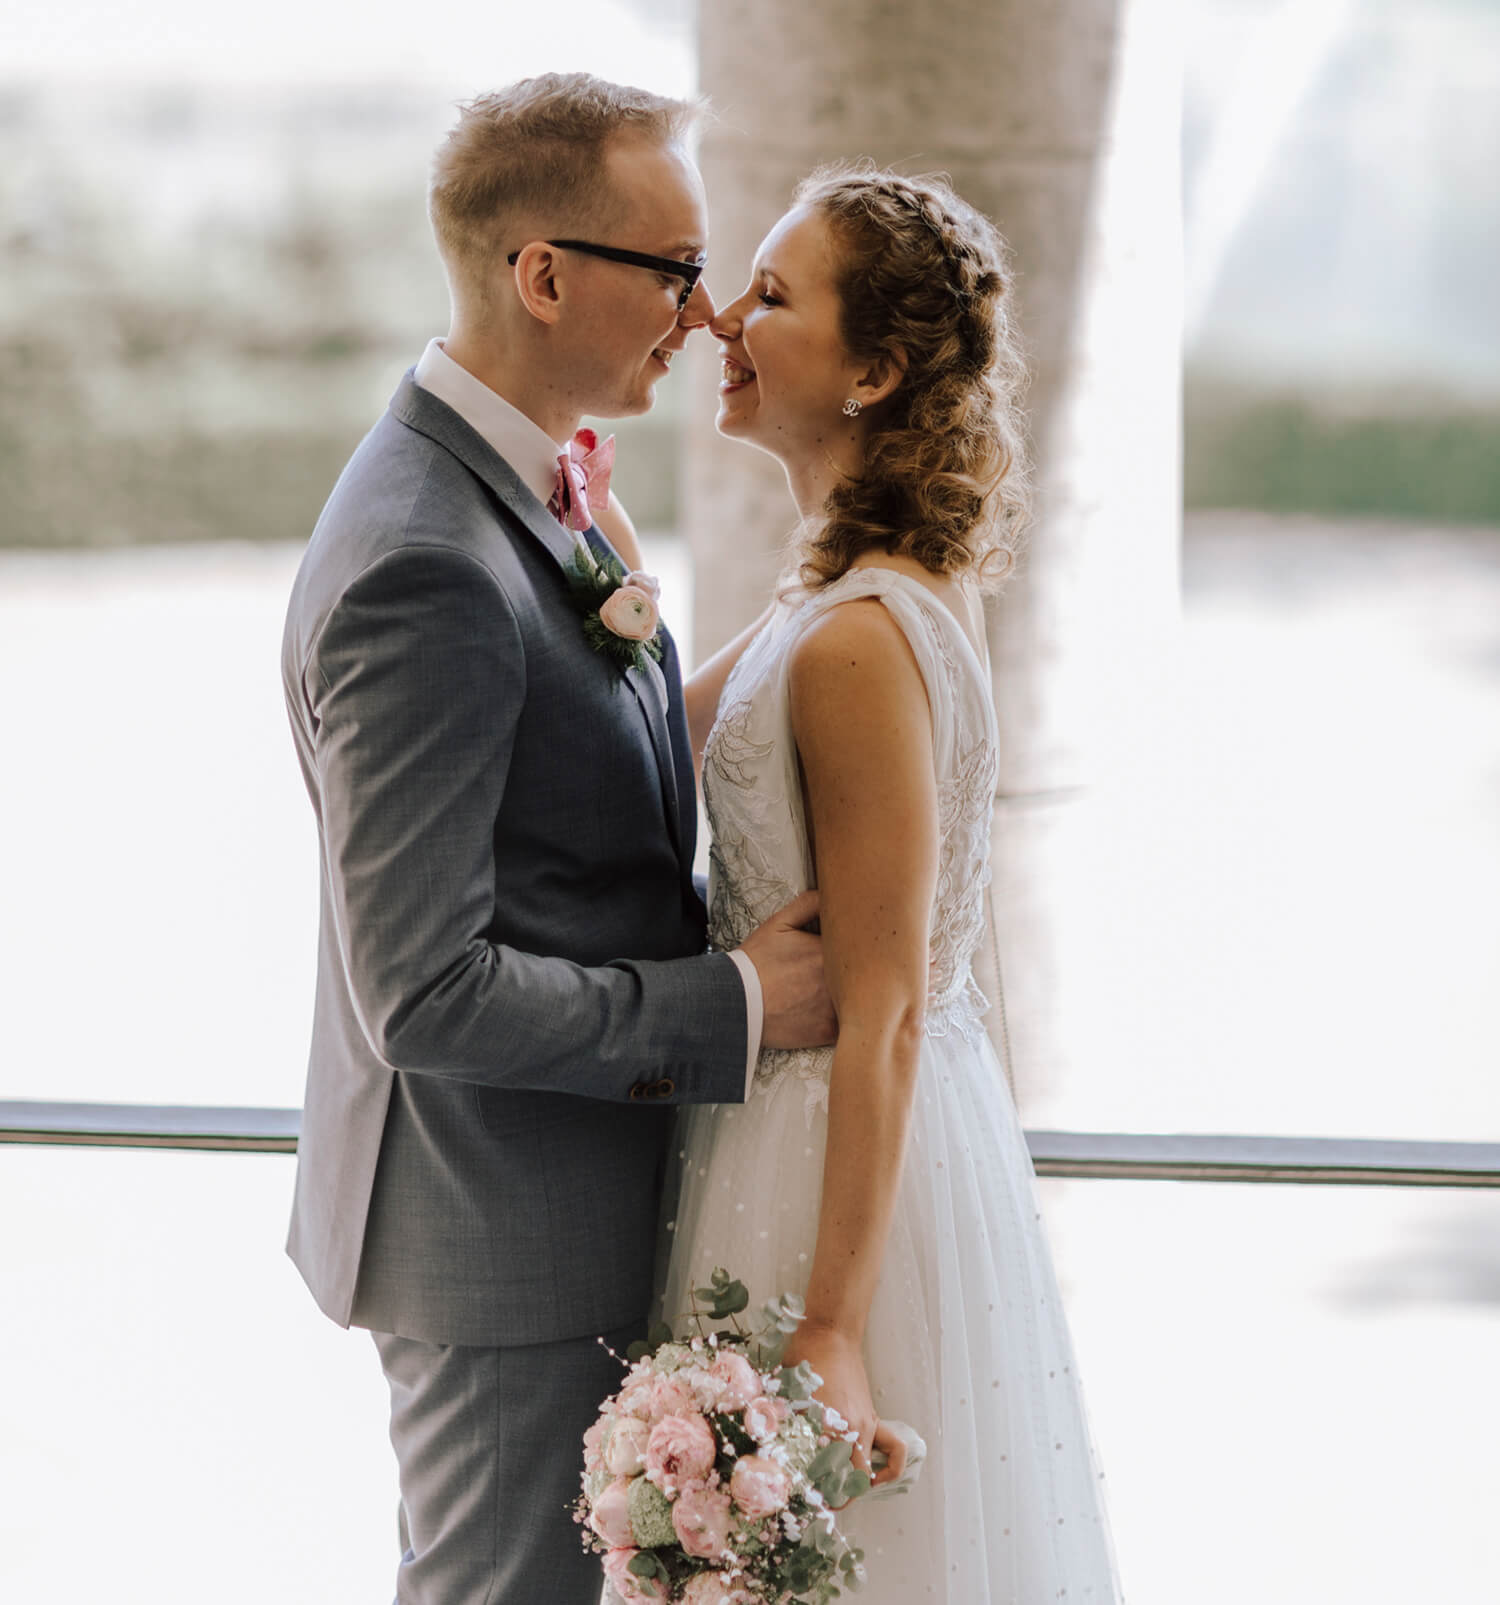 Wedding-Update-Our-Bridal-Couple-Shooting-Part-One-kationette-lifestyleblogger-nrw-weddingday-2018